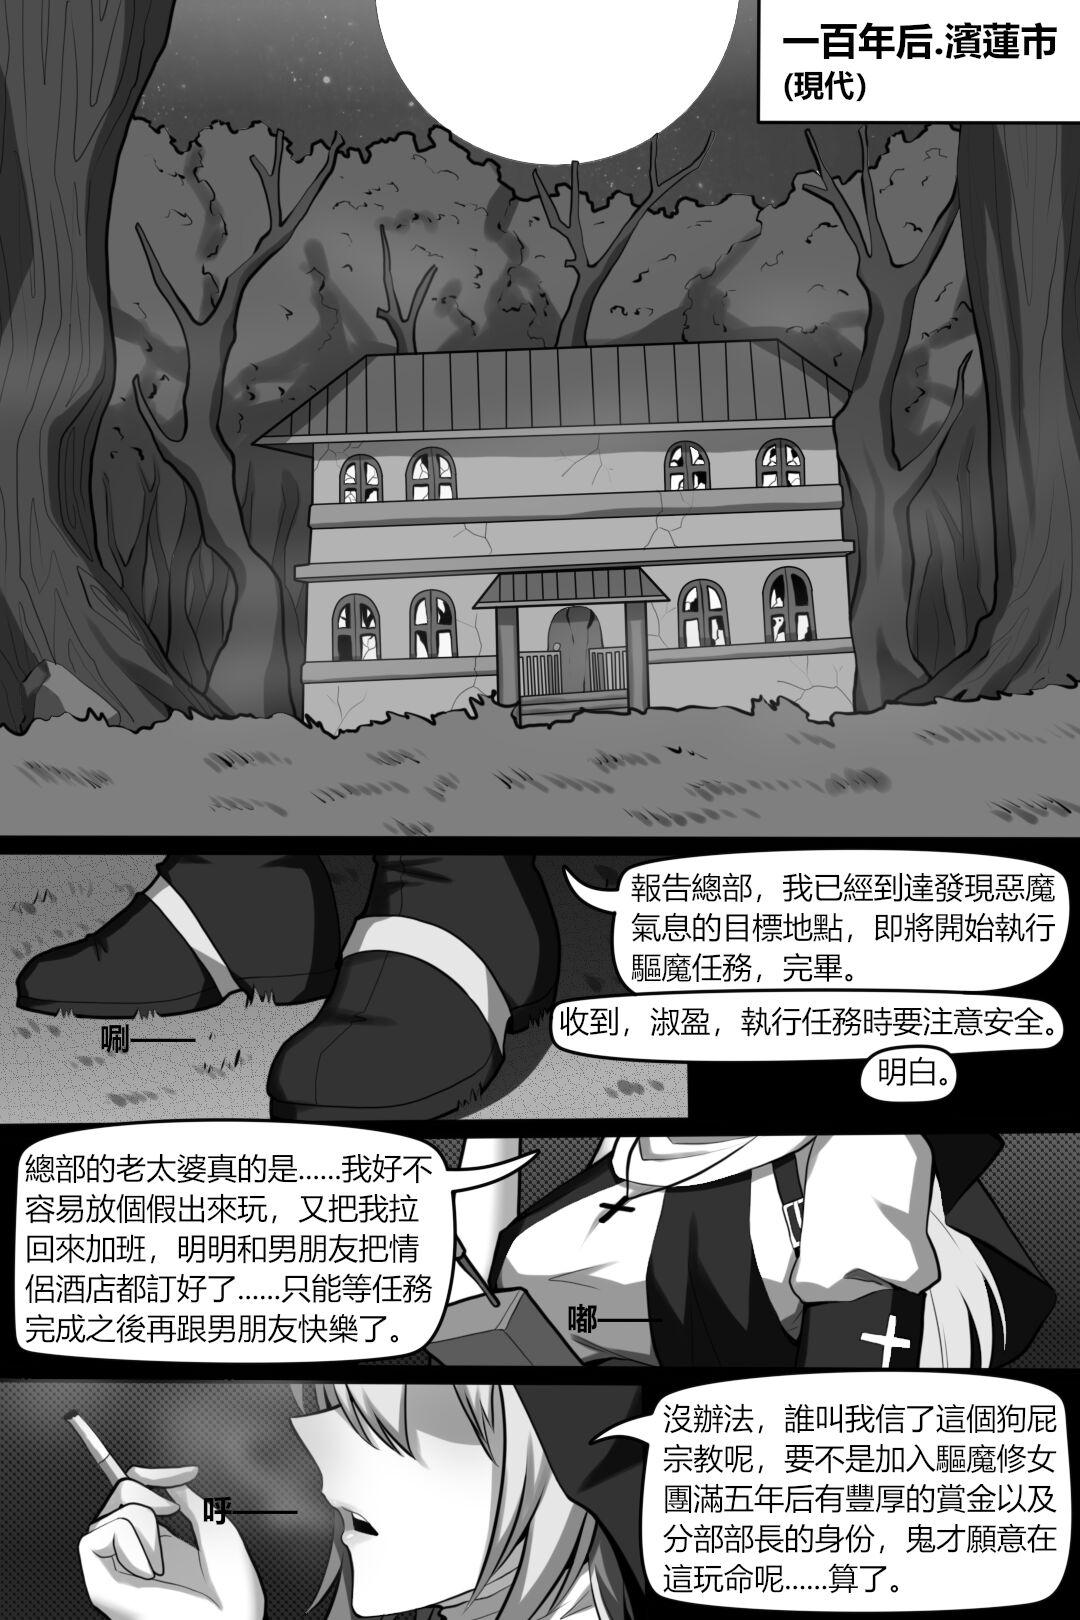 Fucking Bin Lian City Stories Ch2: Exorcist Nun. - Original Chibola - Page 2